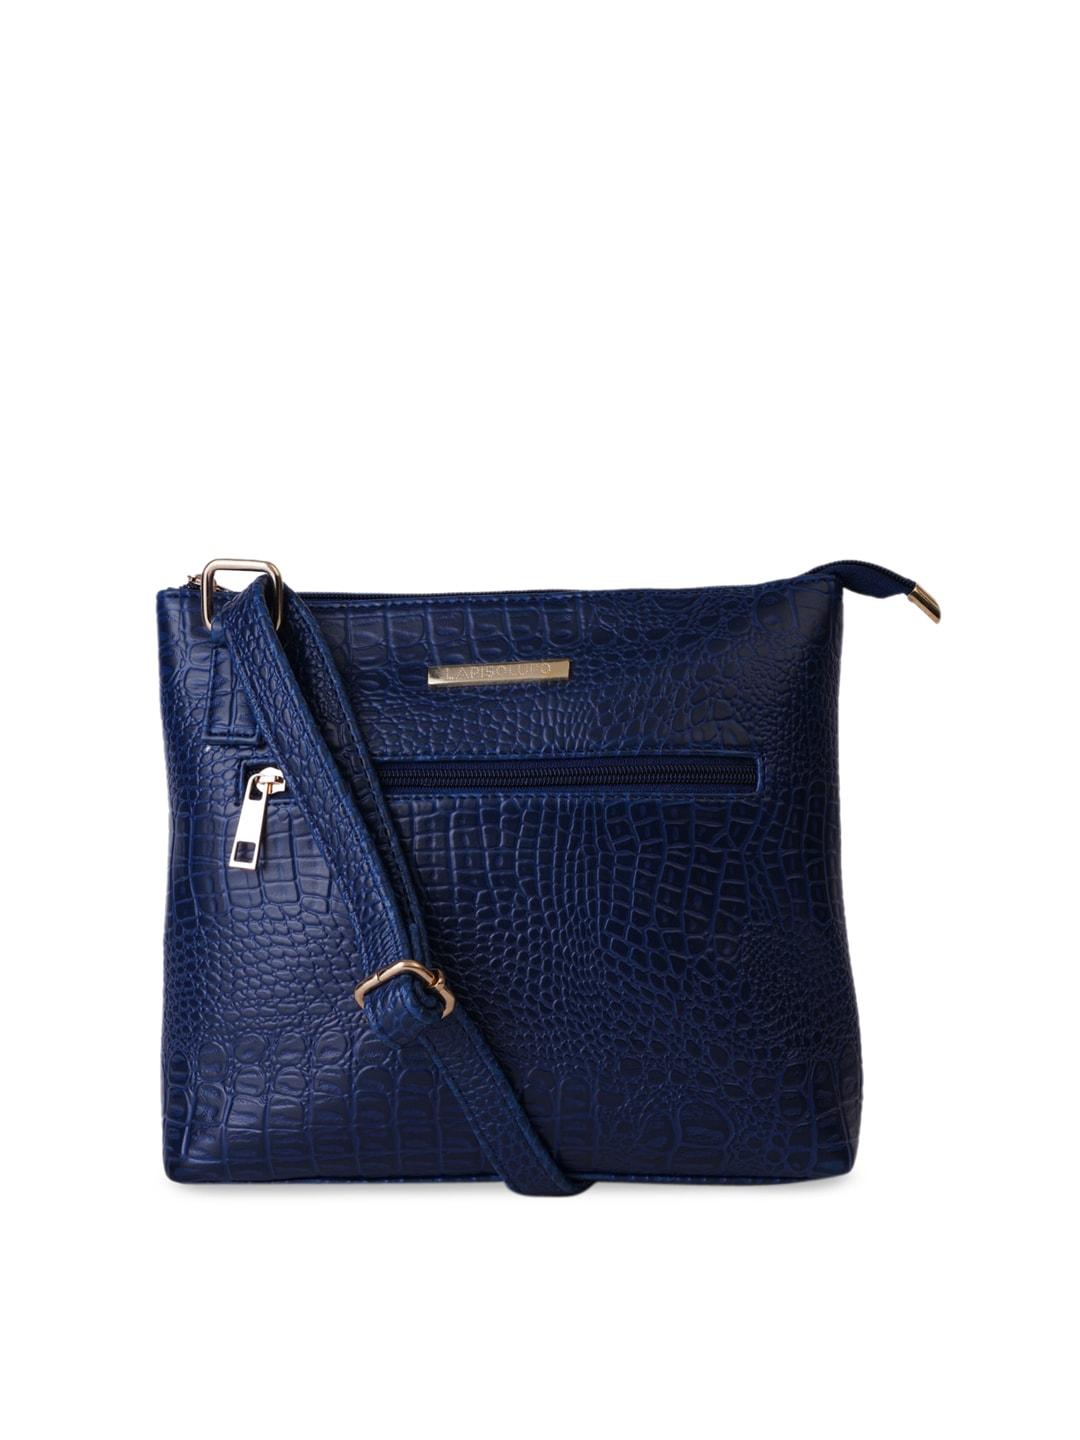 Lapis O Lupo Navy Blue Textured Sling Bag